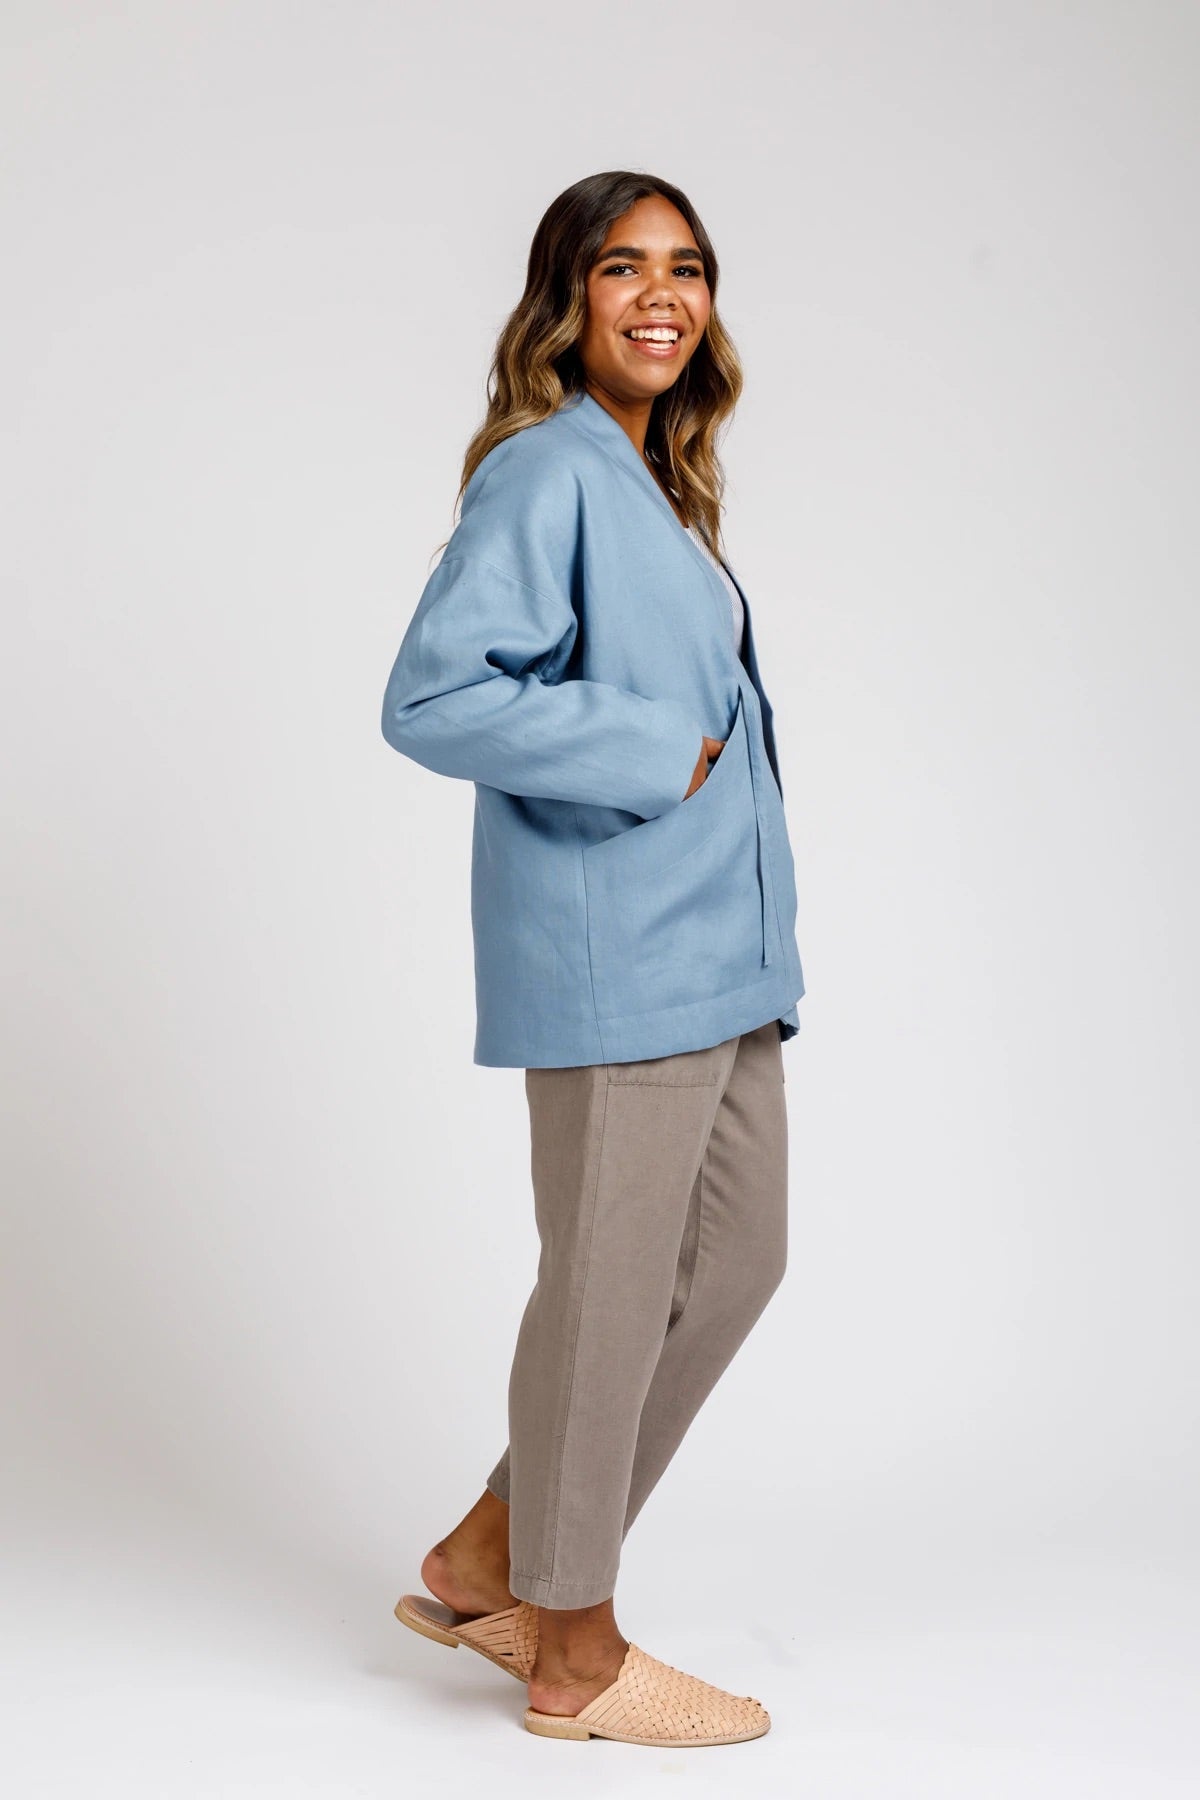 Megan Nielsen - Hovea Jacket & Coat Sewing Pattern